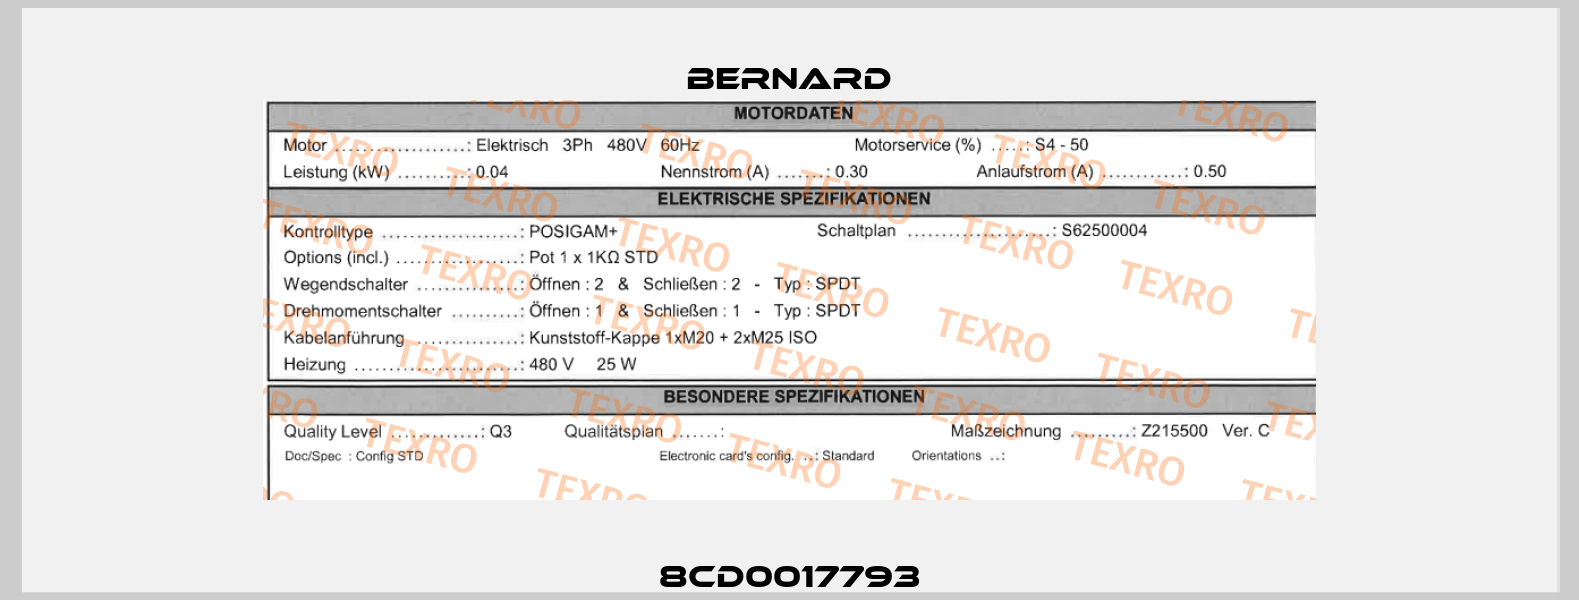 8CD0017793 Bernard